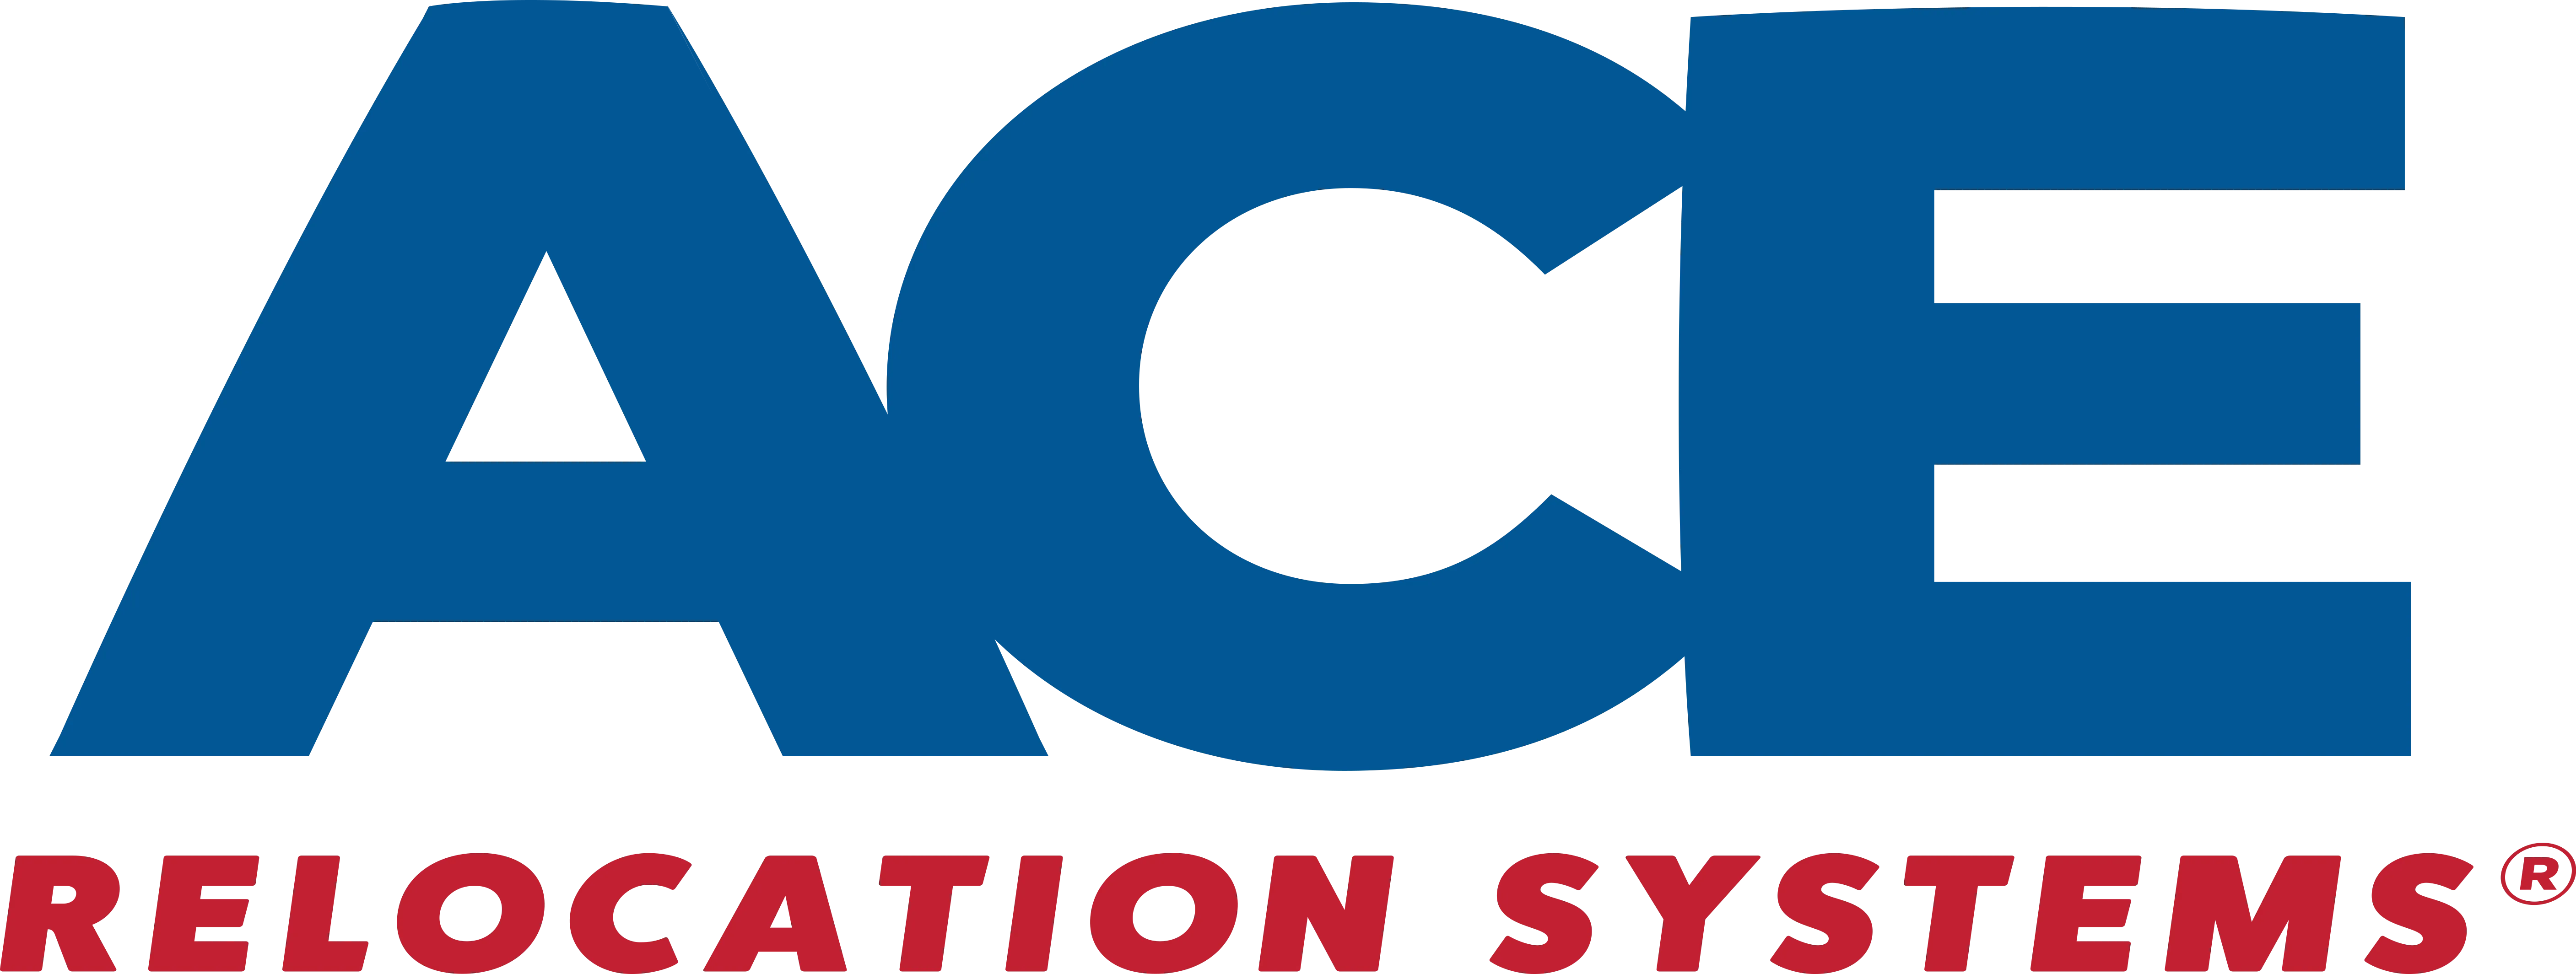 Ace Relocation Systems, Inc.- Atlas Van Lines | Chicago Location logo